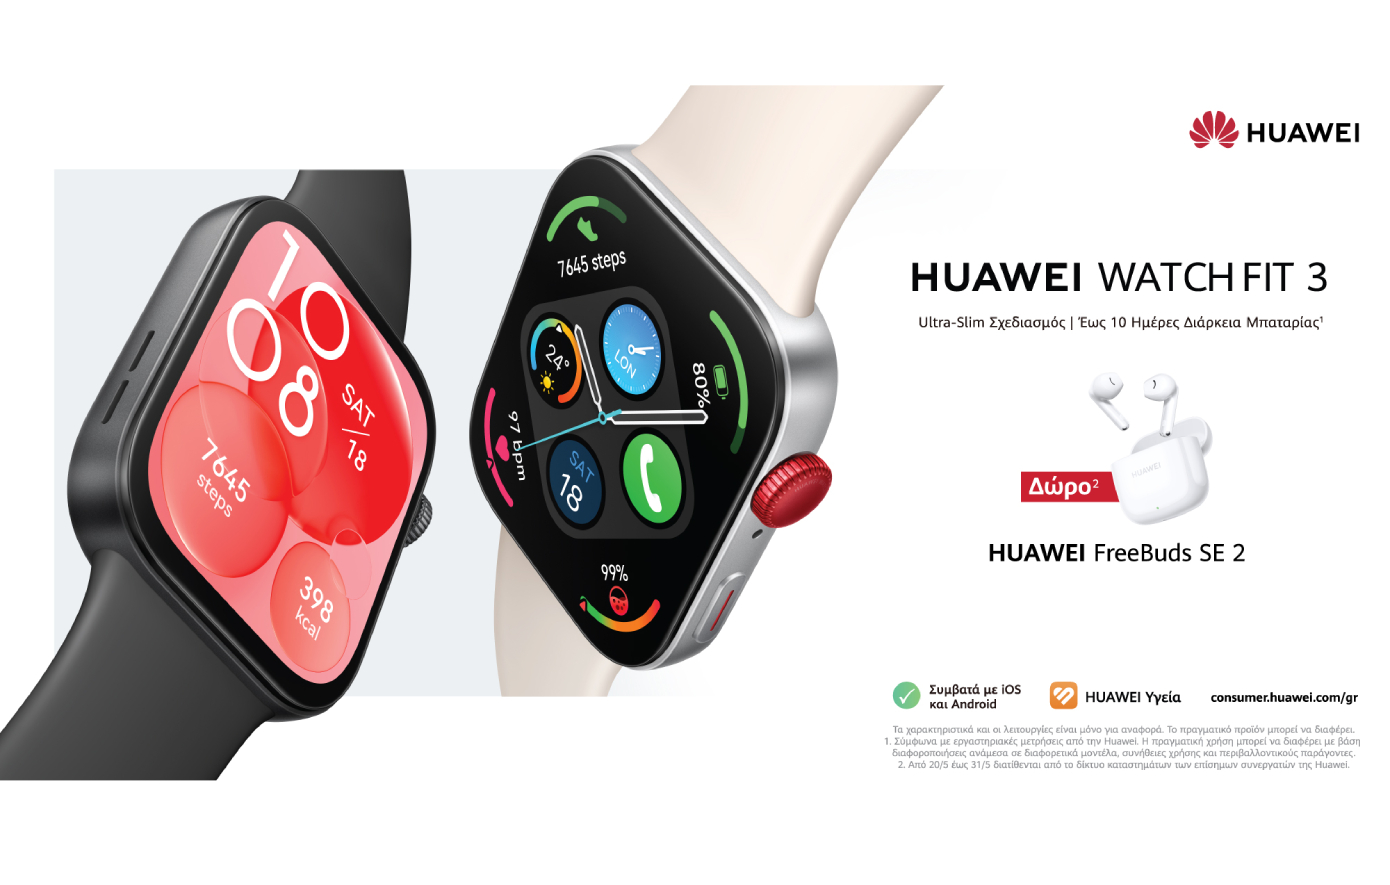 HUAWEI FIT 3: Ενσωματώνοντας τη μόδα, την καινοτομία και το στυλ σε ένα απίθανο νέο smartwatch